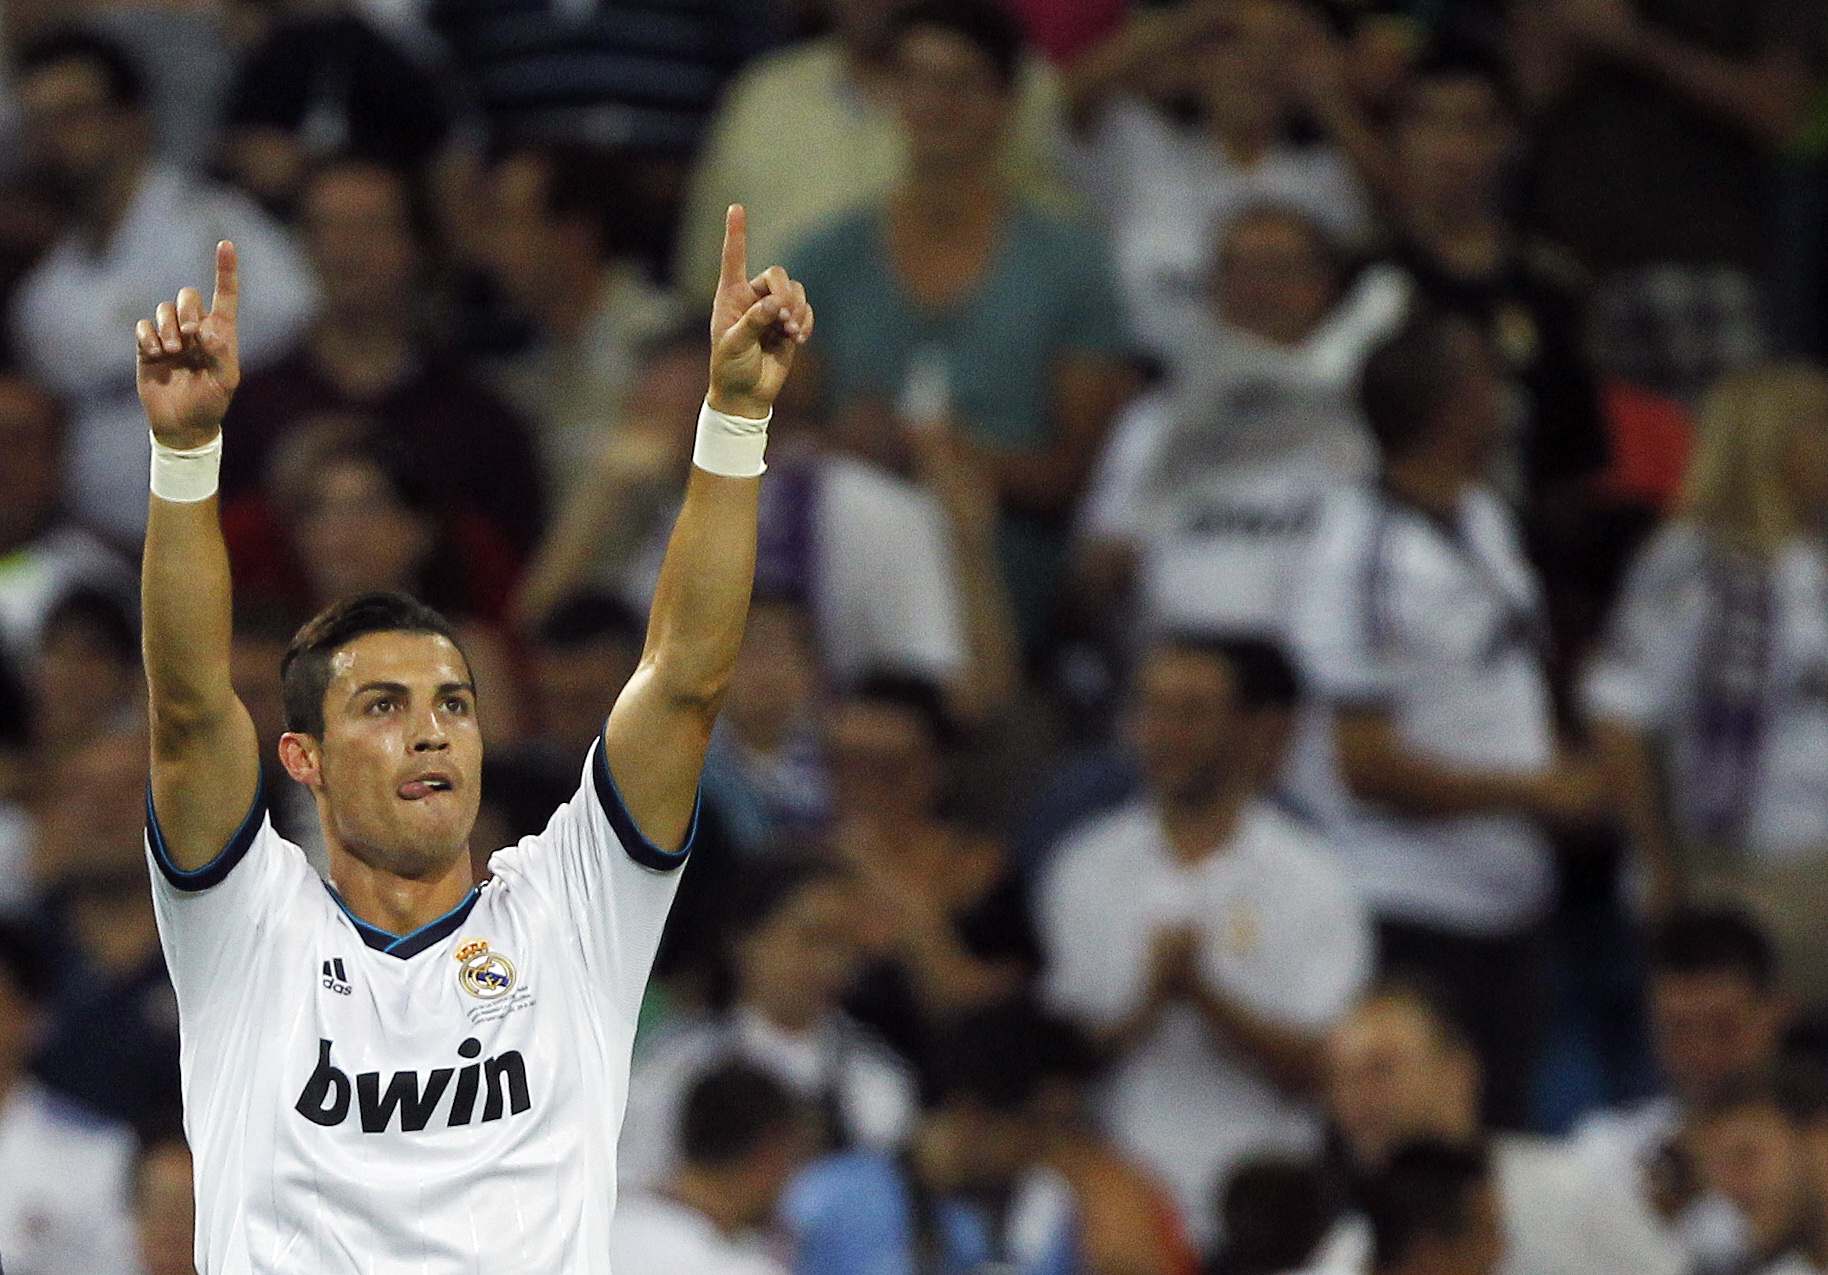 Cristiano Ronaldo, Tiga Alasan Mengapa Dia Layak Meraih Fifa Ballon D'or 2012